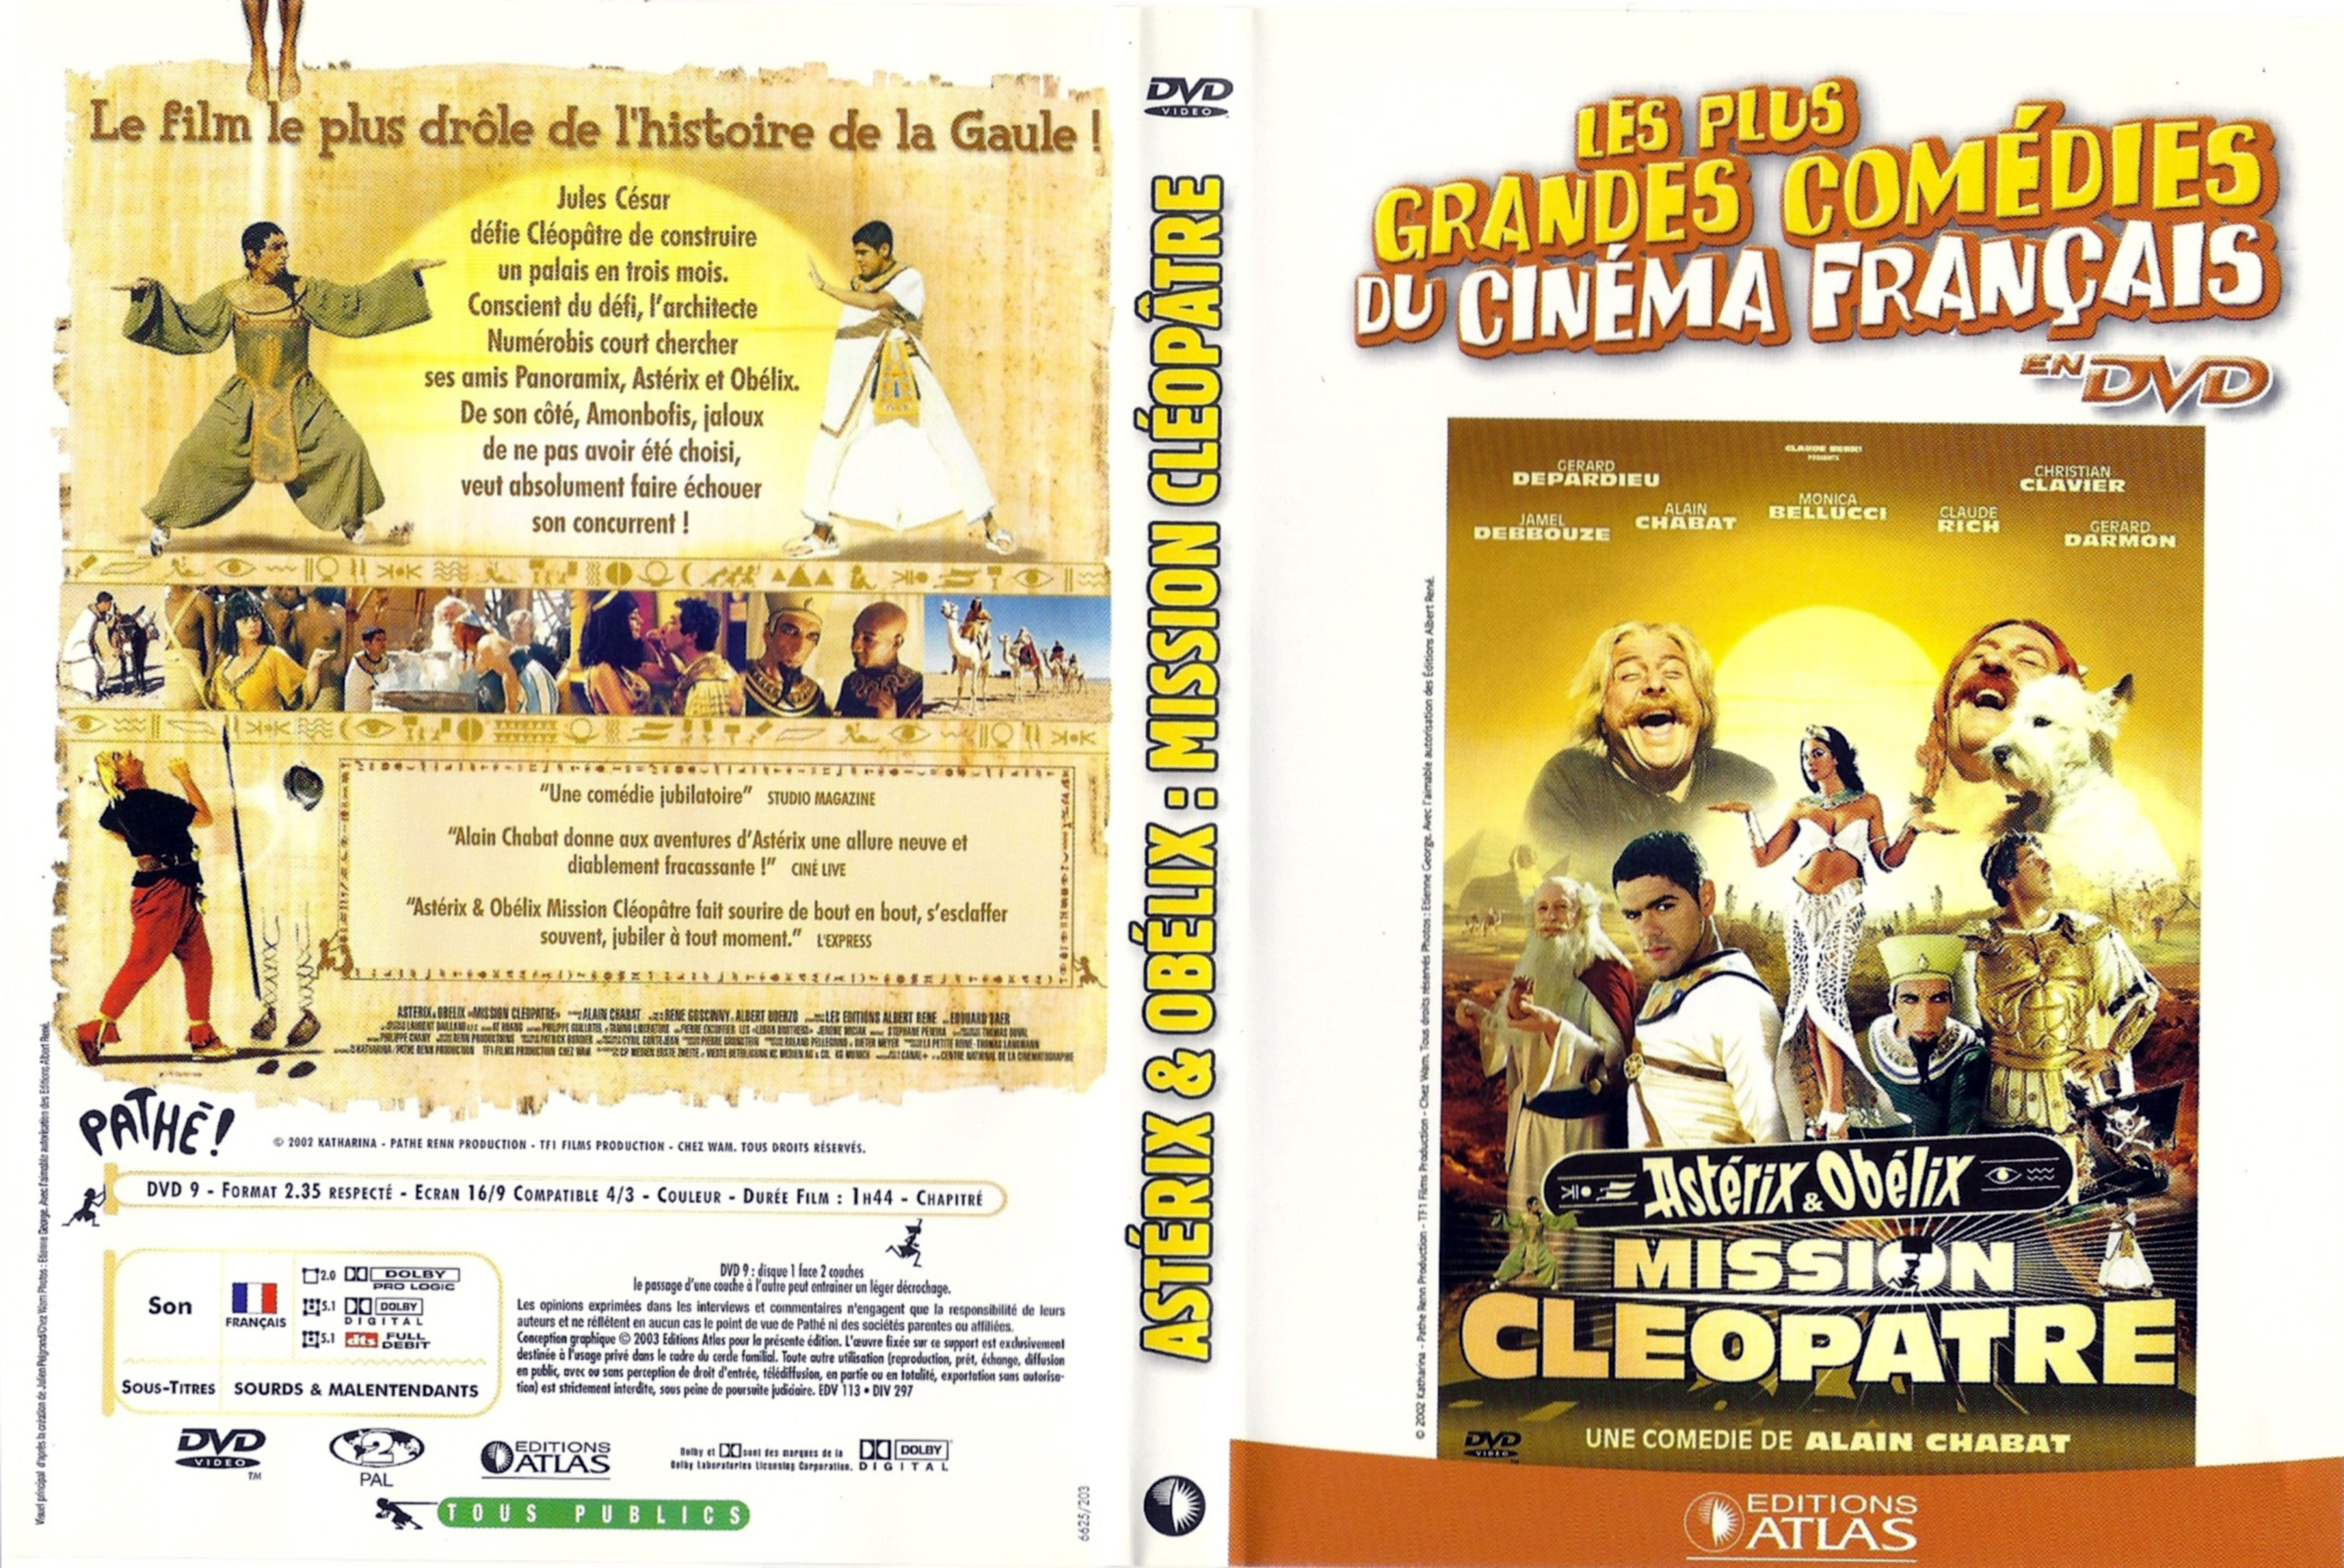 Jaquette DVD Asterix et Obelix mission Clopatre v3